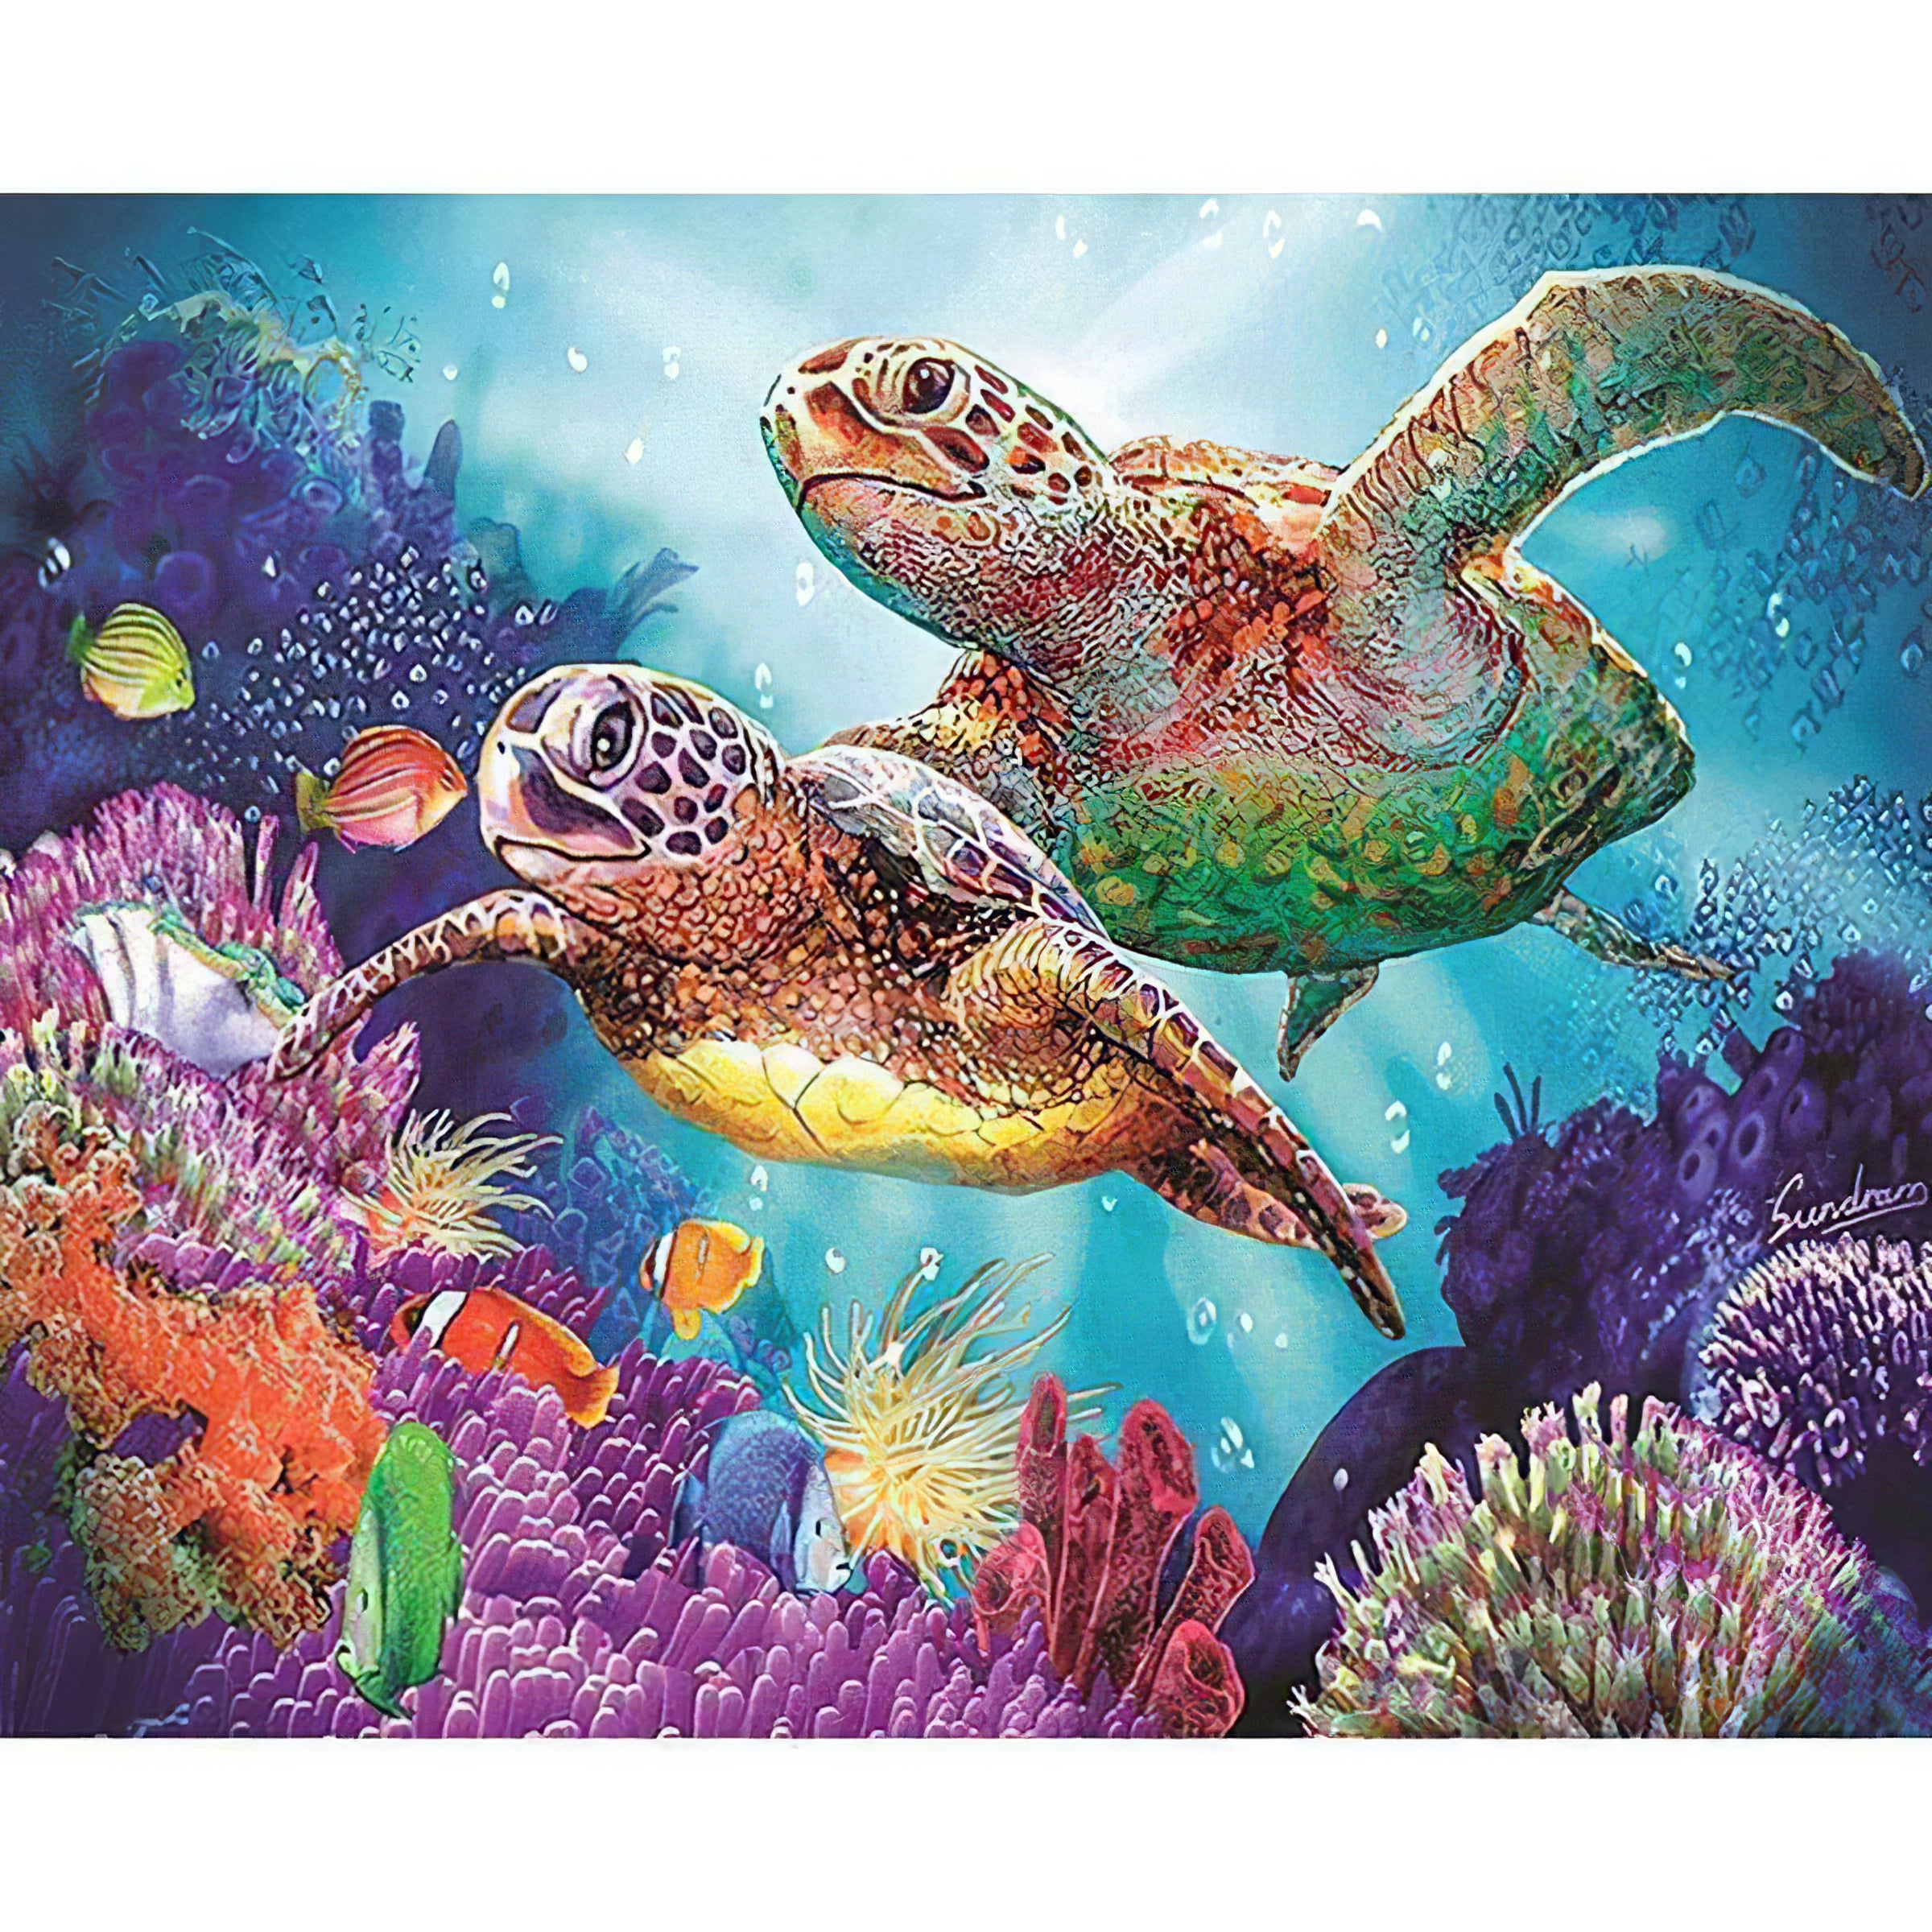 Deux tortues dans l'océan